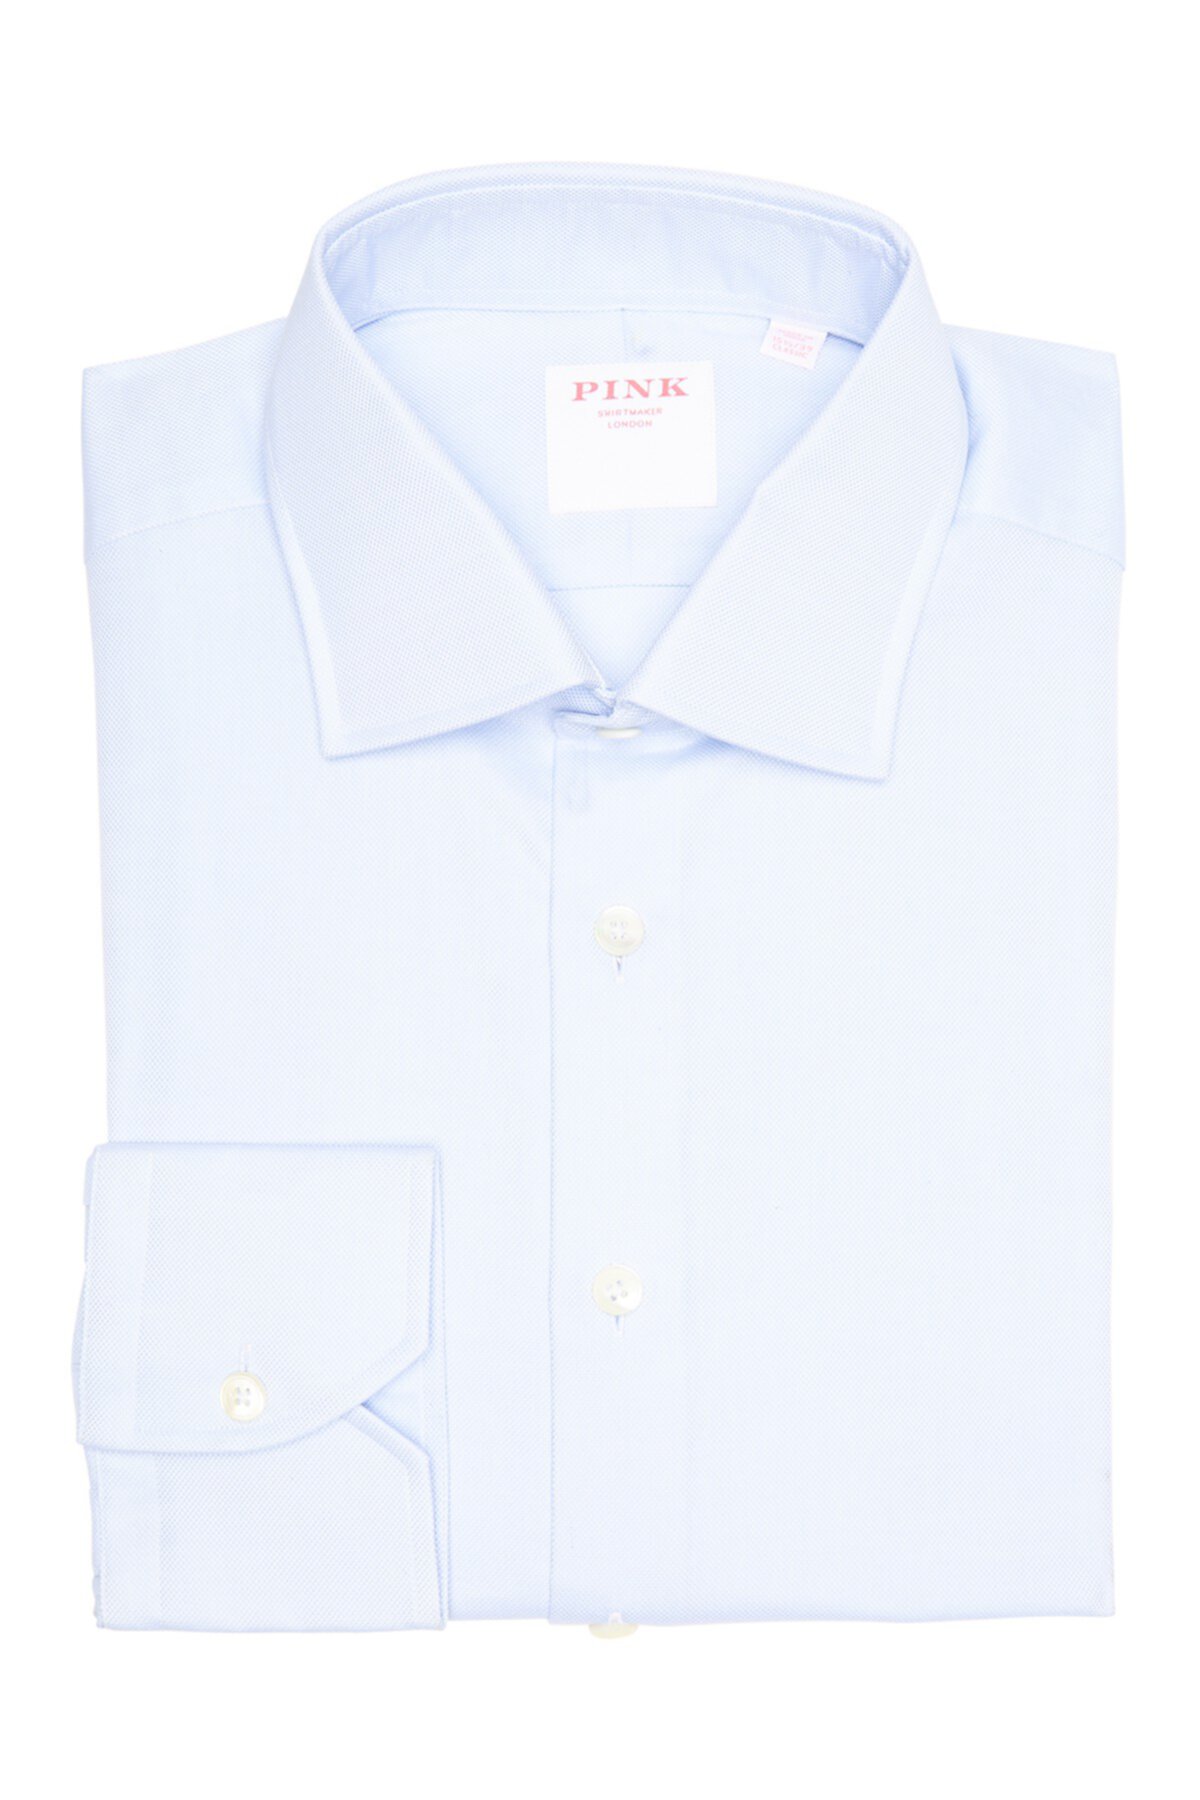 Royal Oxford Solid Classic Fit Dress Shirt THOMAS PINK